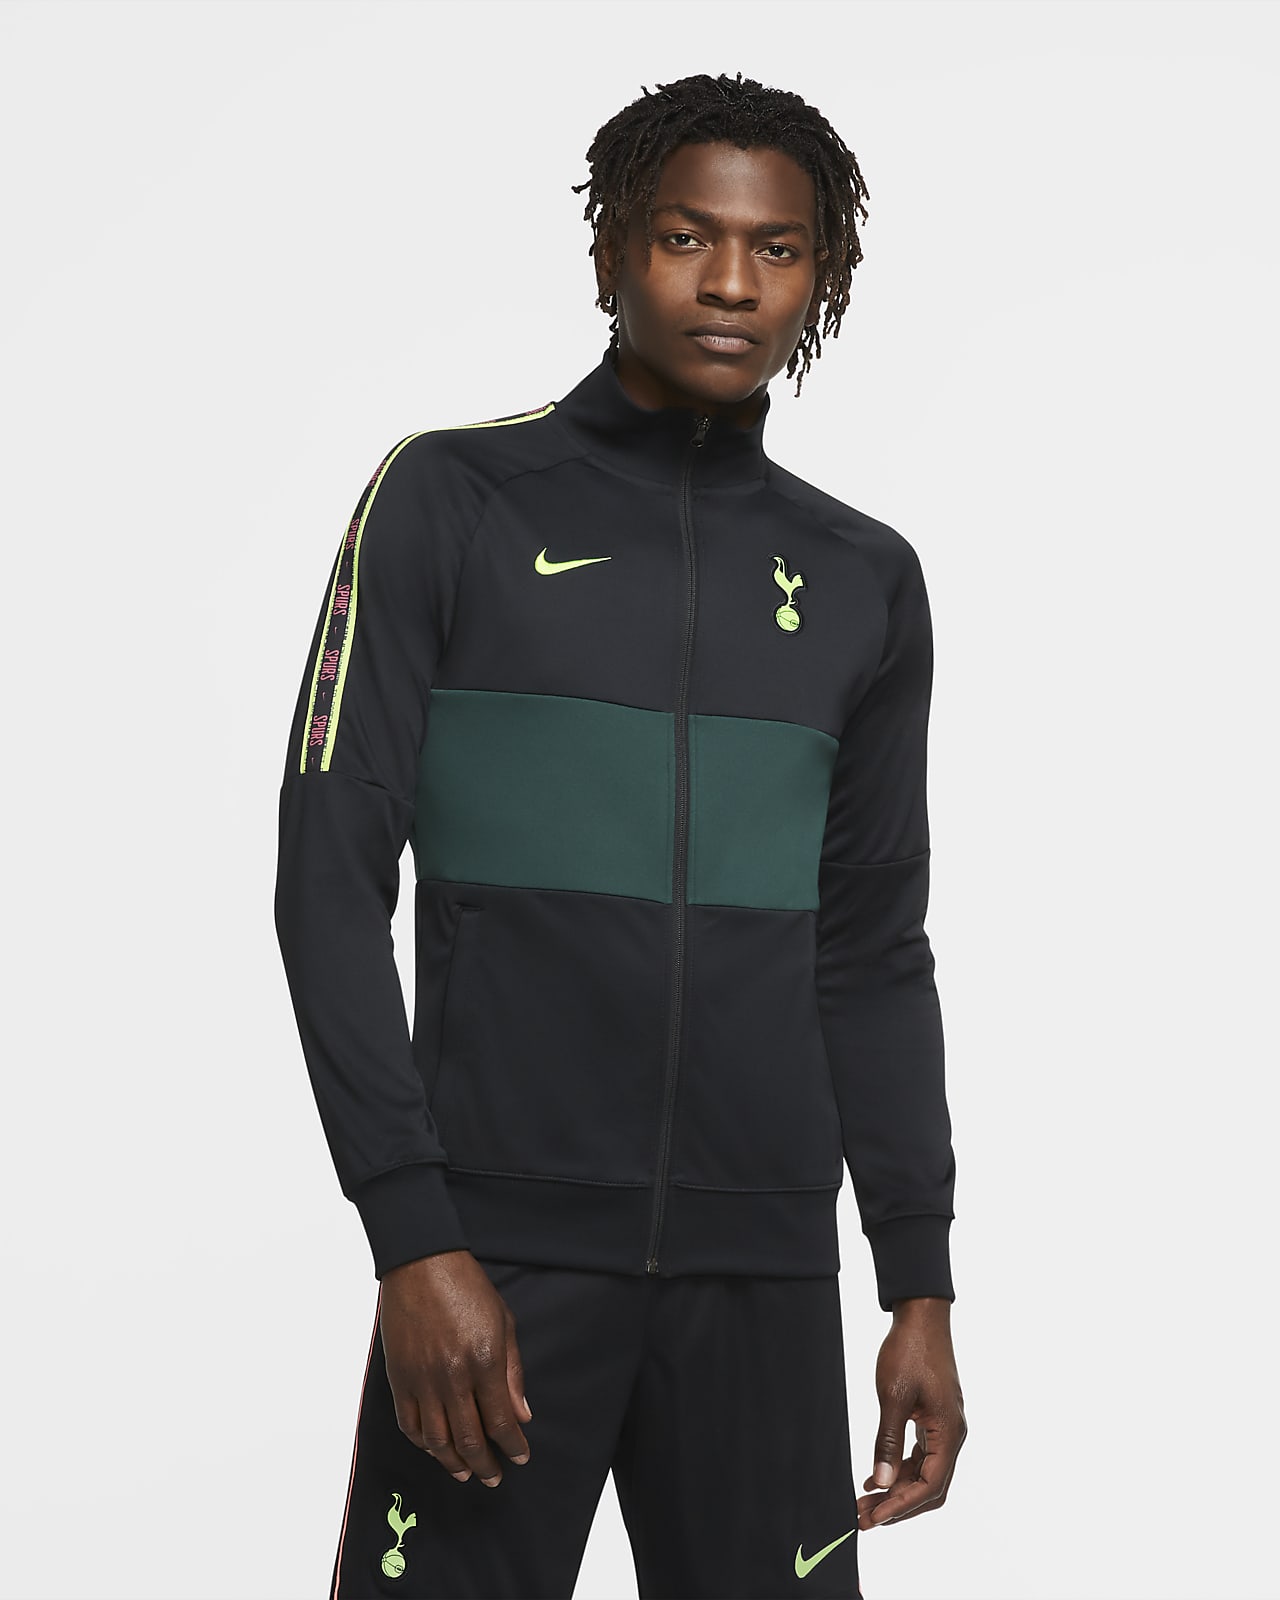 Tottenham Hotspur Men's Tracksuit Jacket. Nike EG